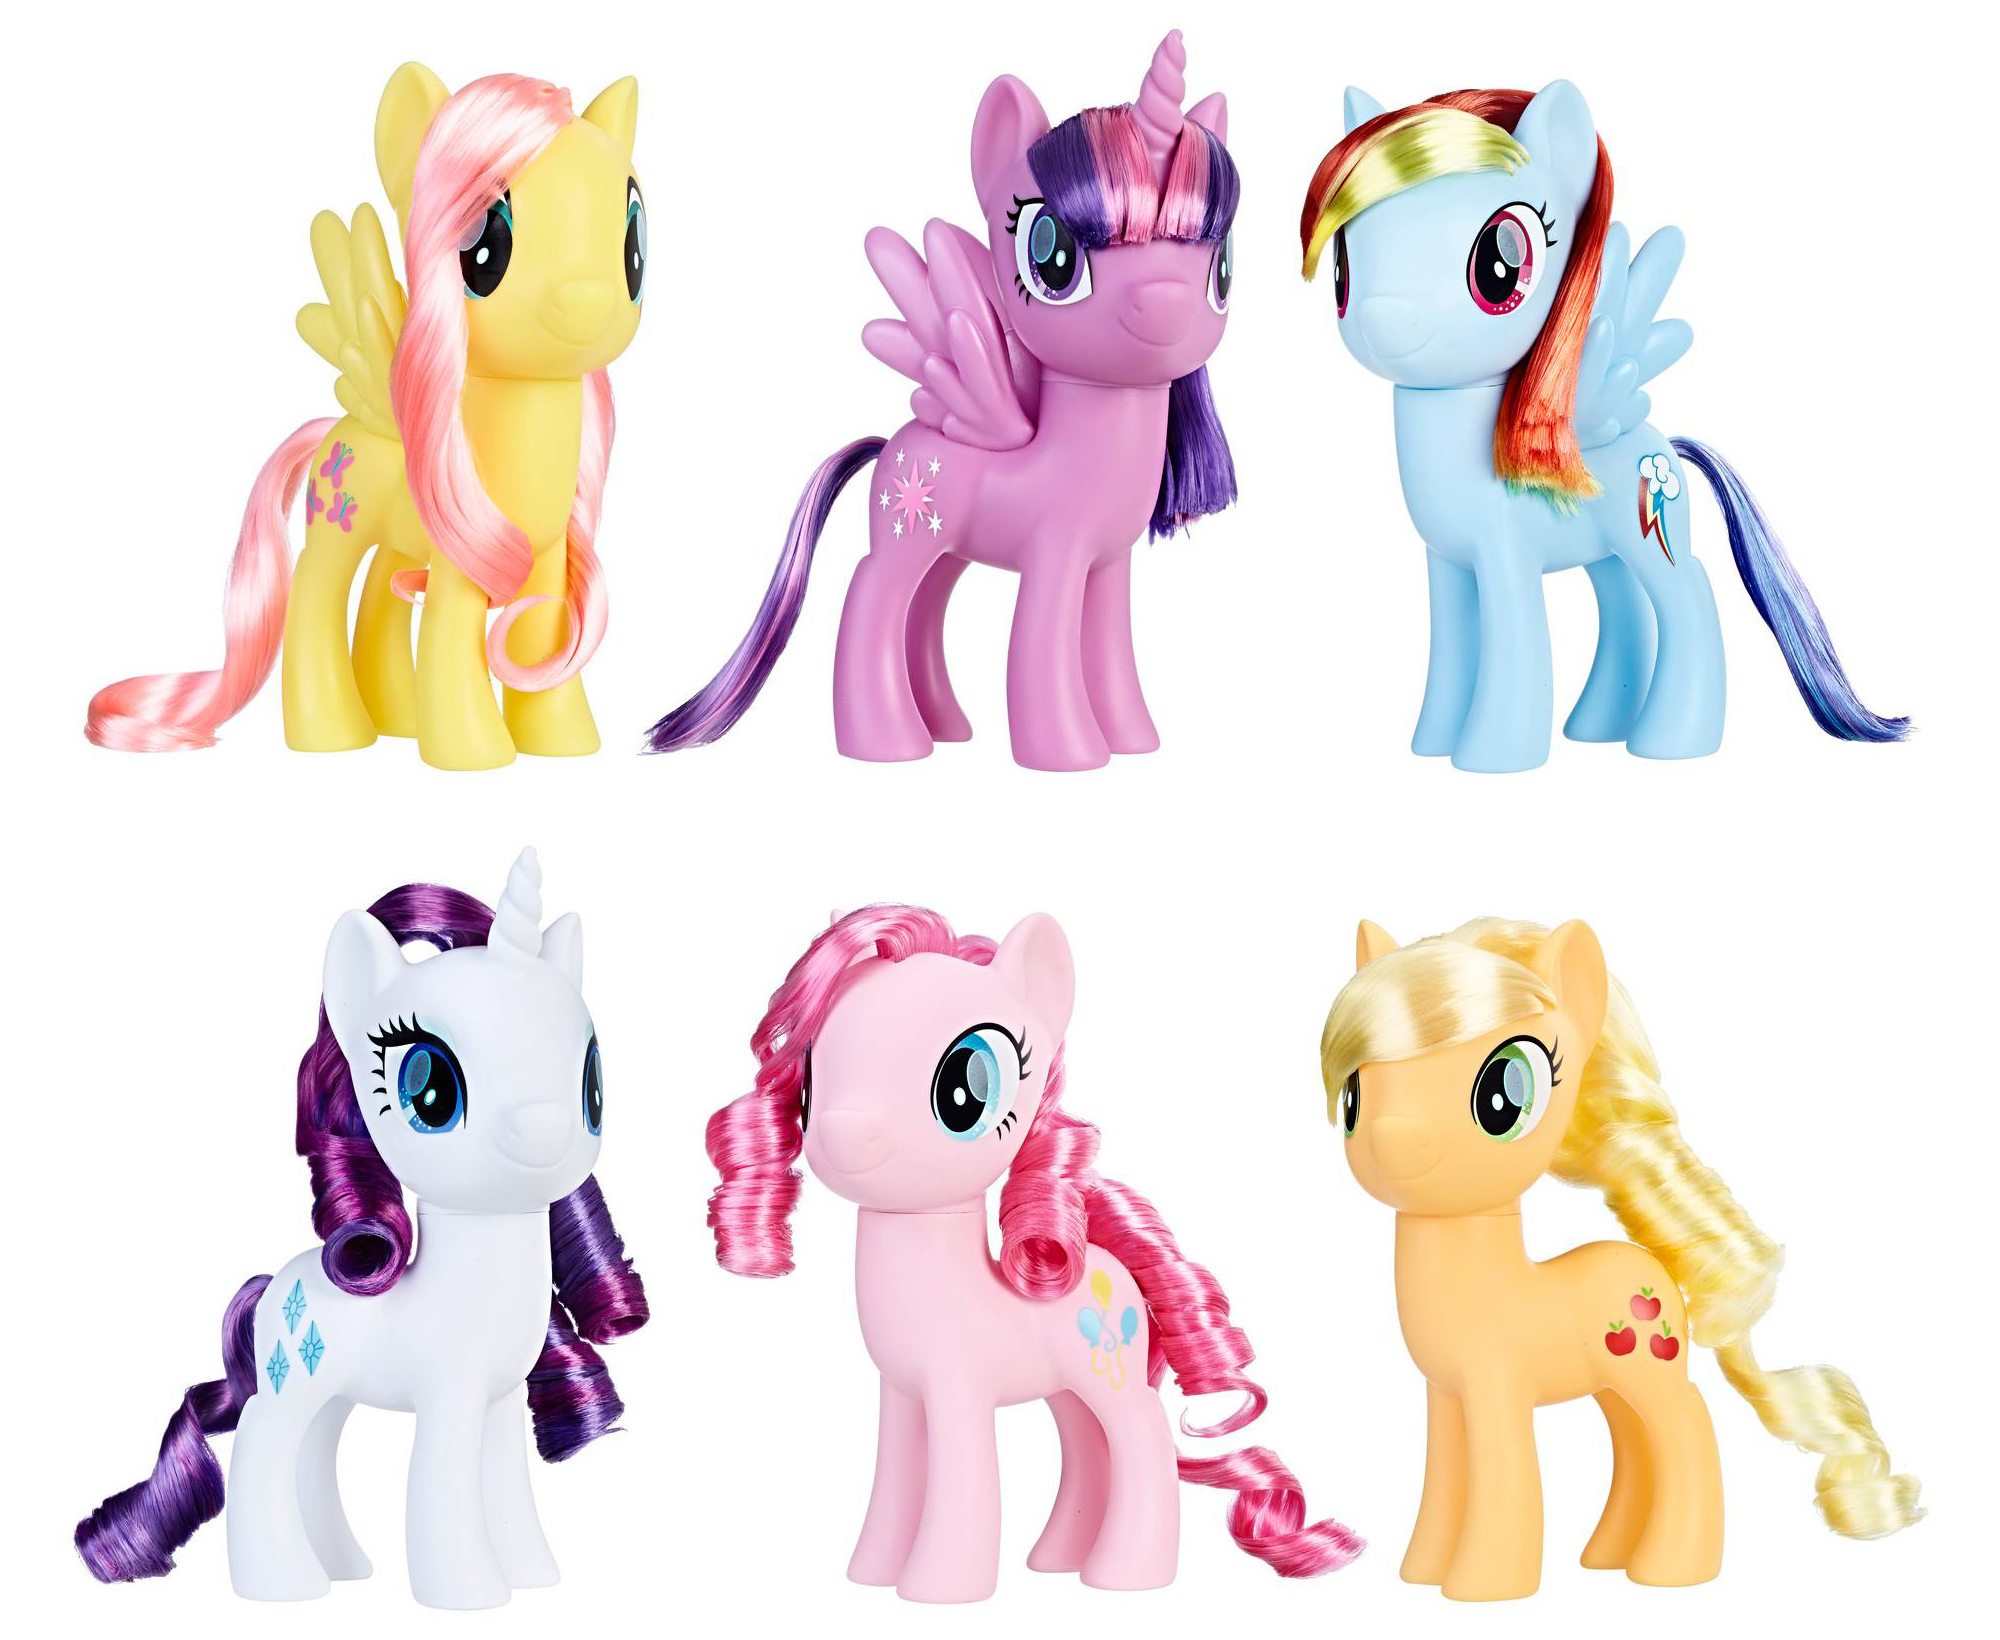 My little pony сборник. Игровой набор my little Pony 6 мега пони [f17835l0]. Набор май Литтл пони из 6 пони. My little Pony коллекция Friendship Magic. My little Pony Hasbro набор 6 пони.